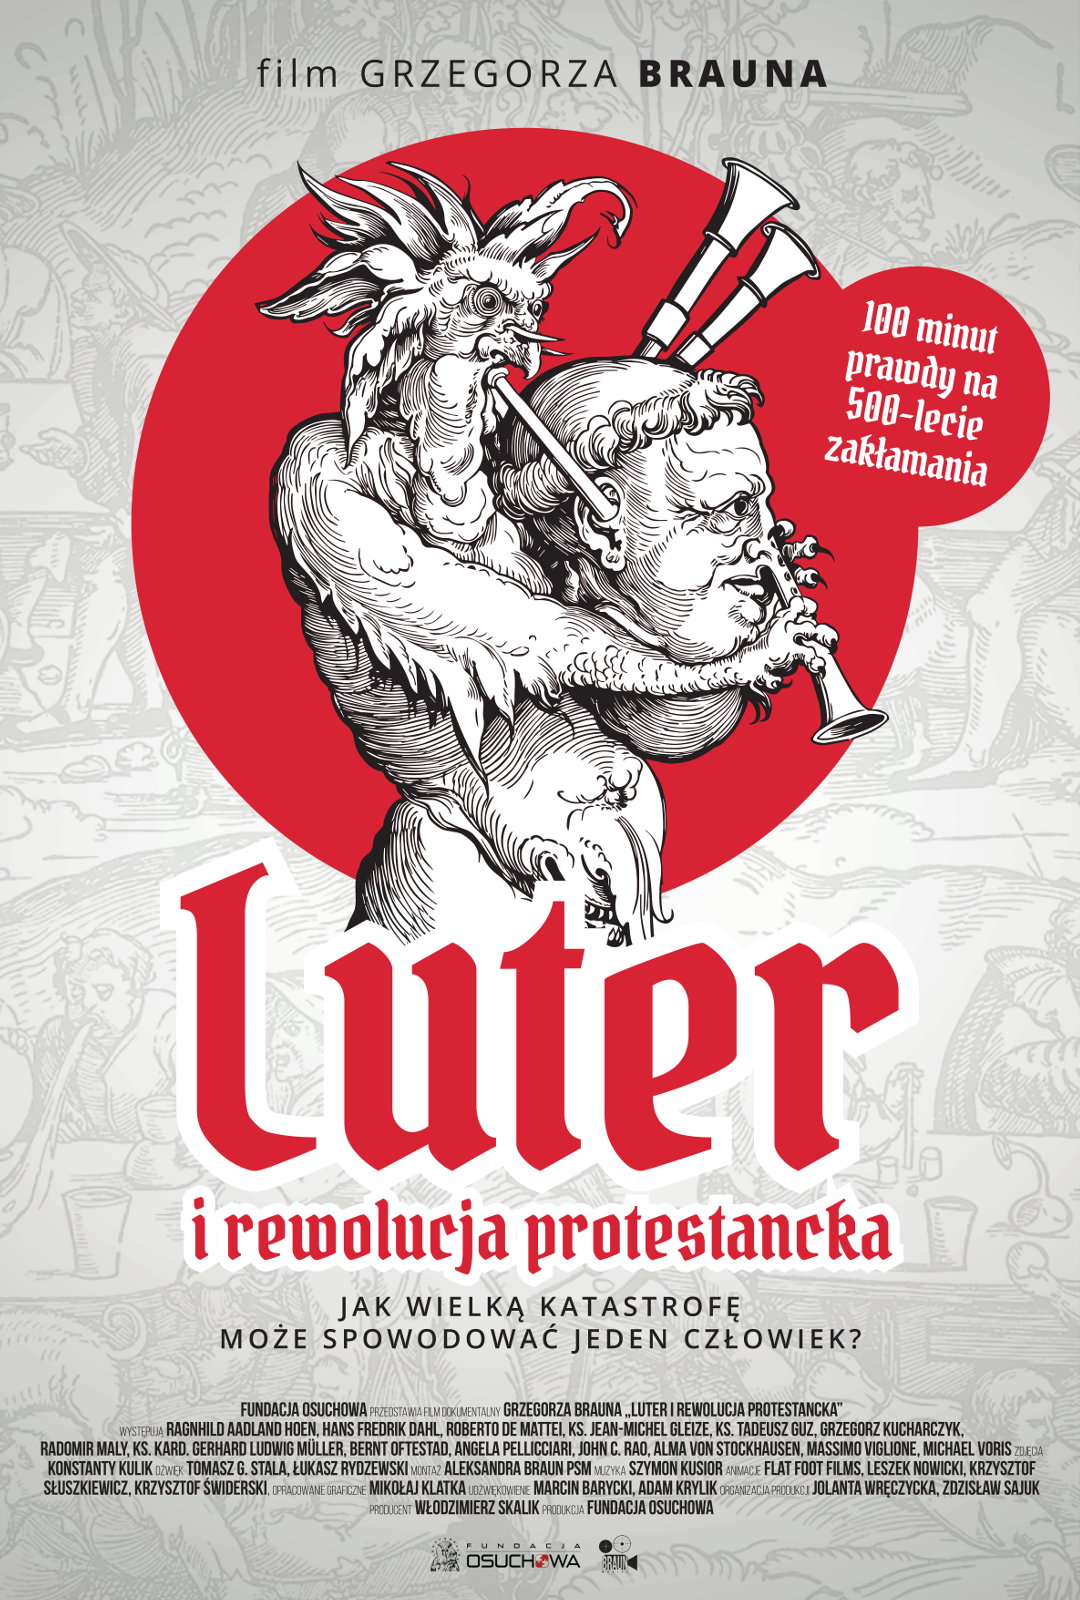 Luter i rewolucja protestancka